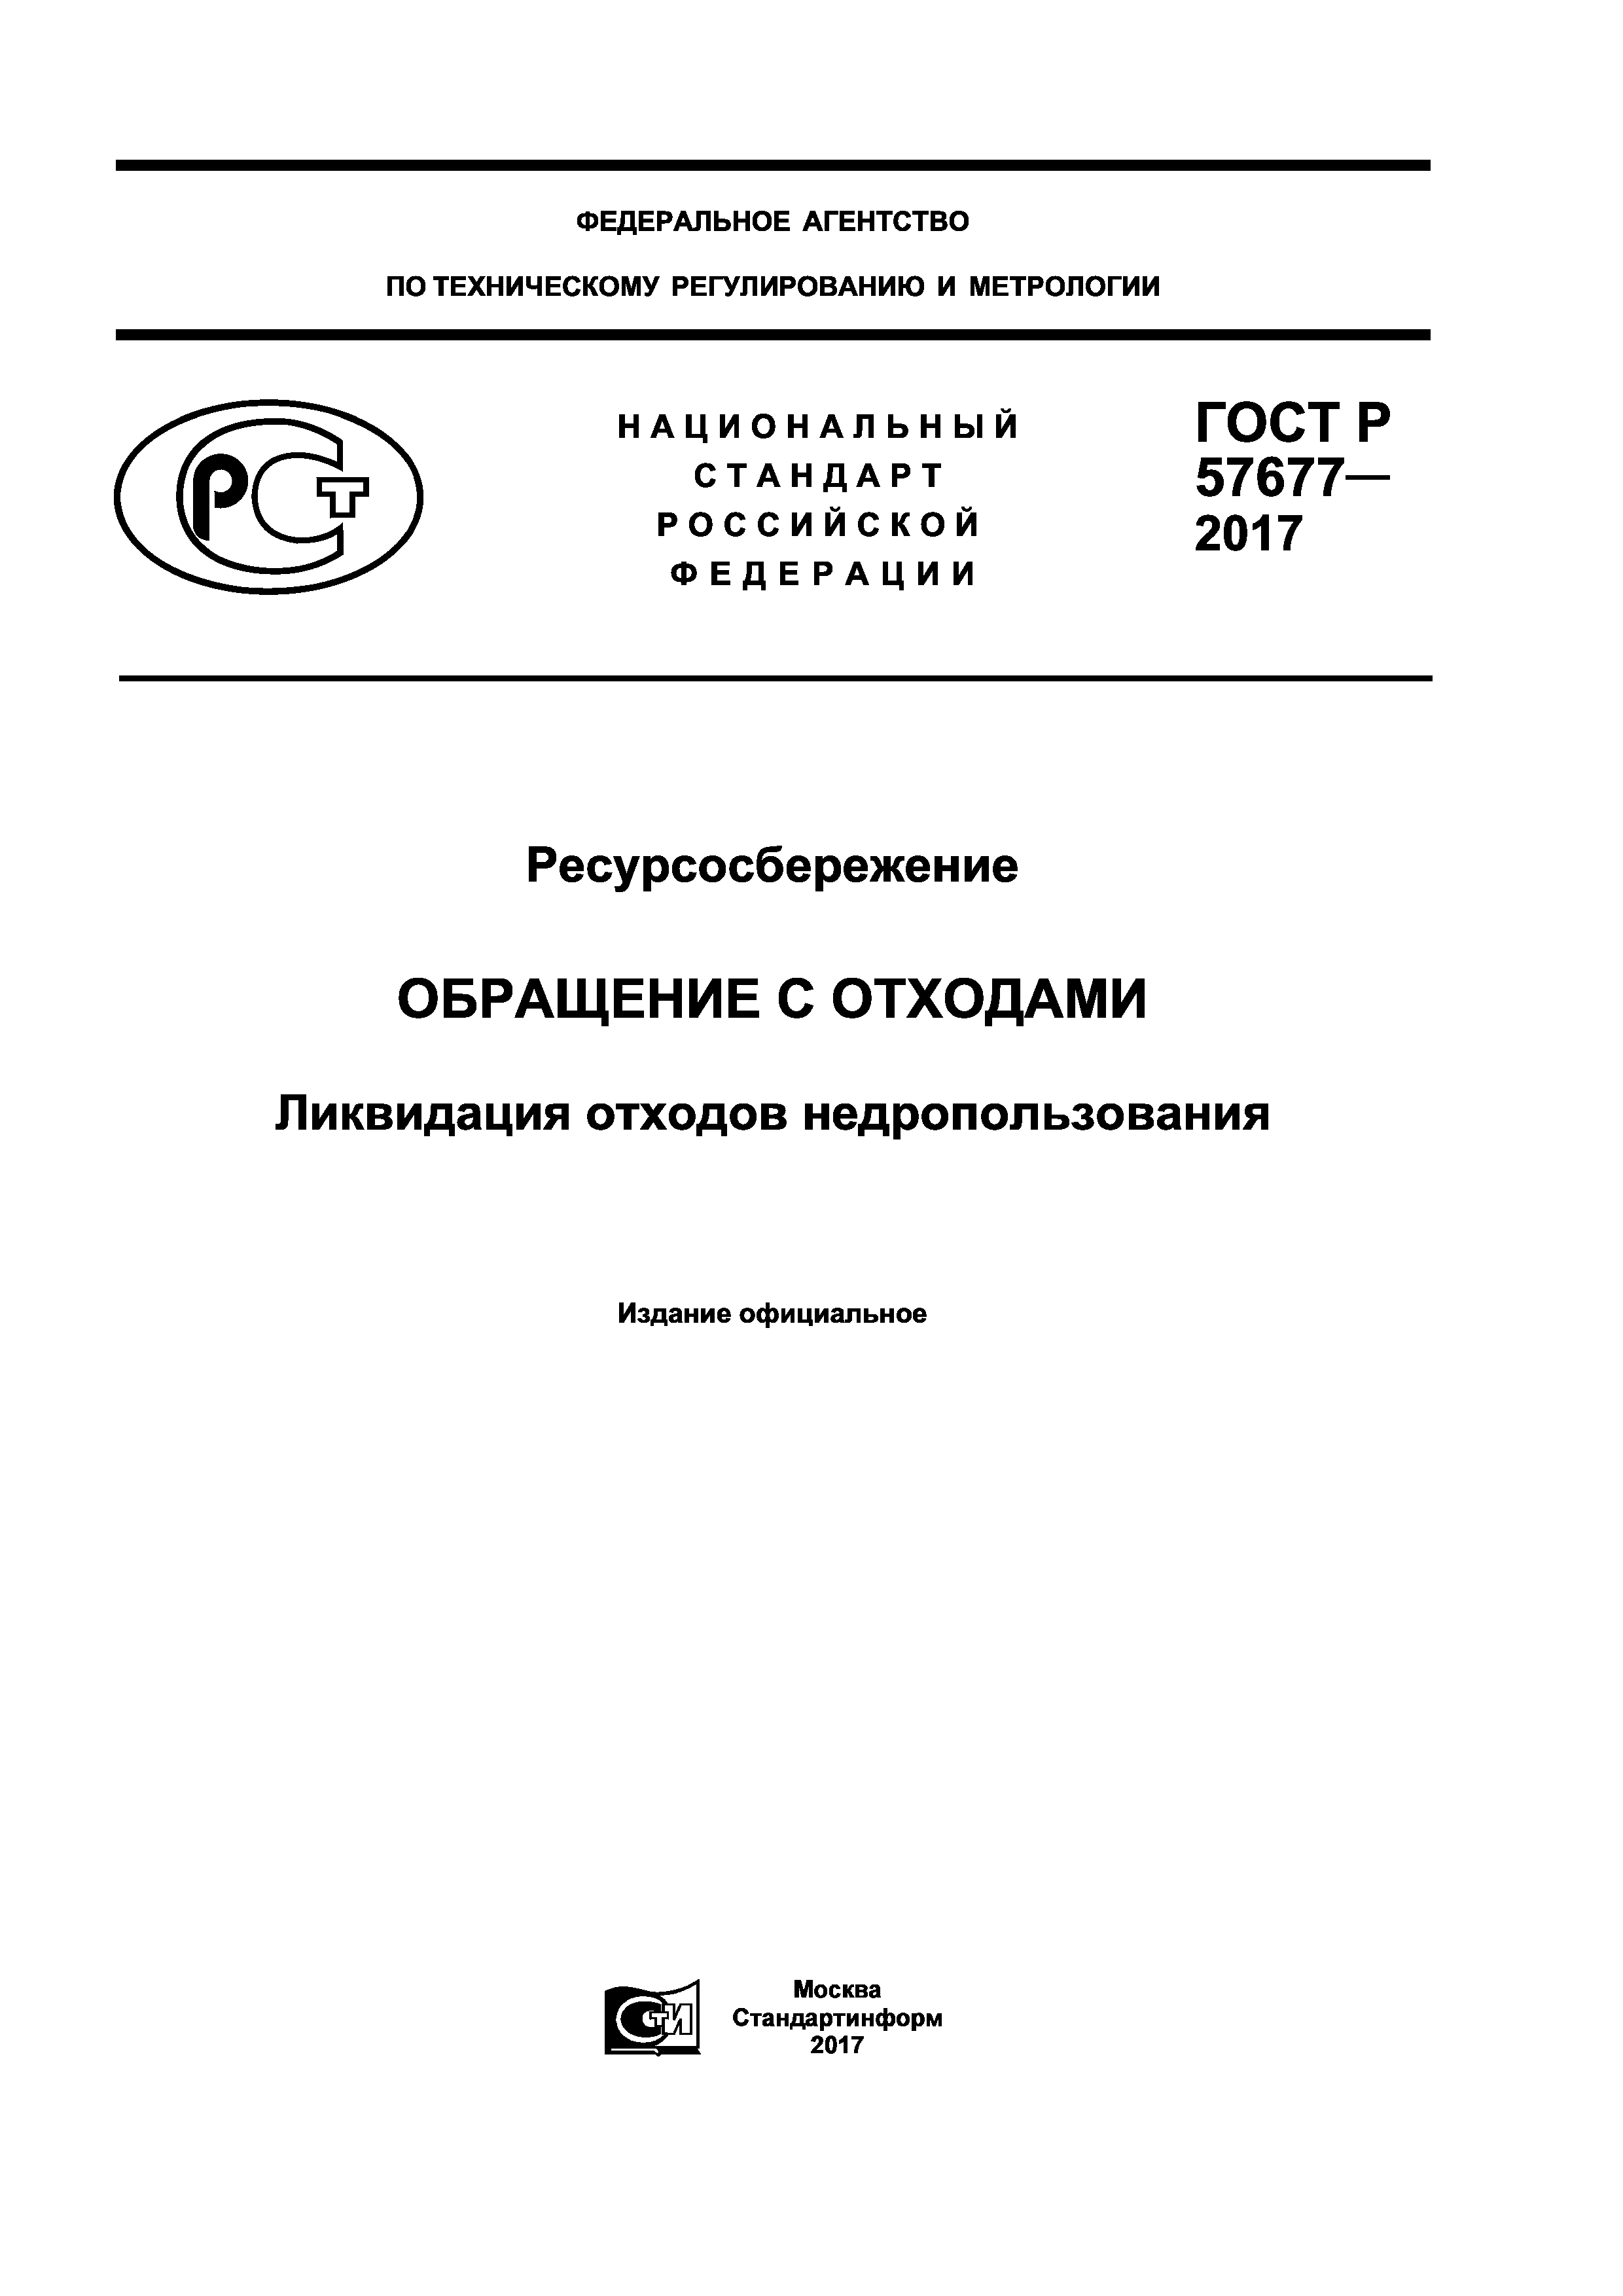 ГОСТ Р 57677-2017